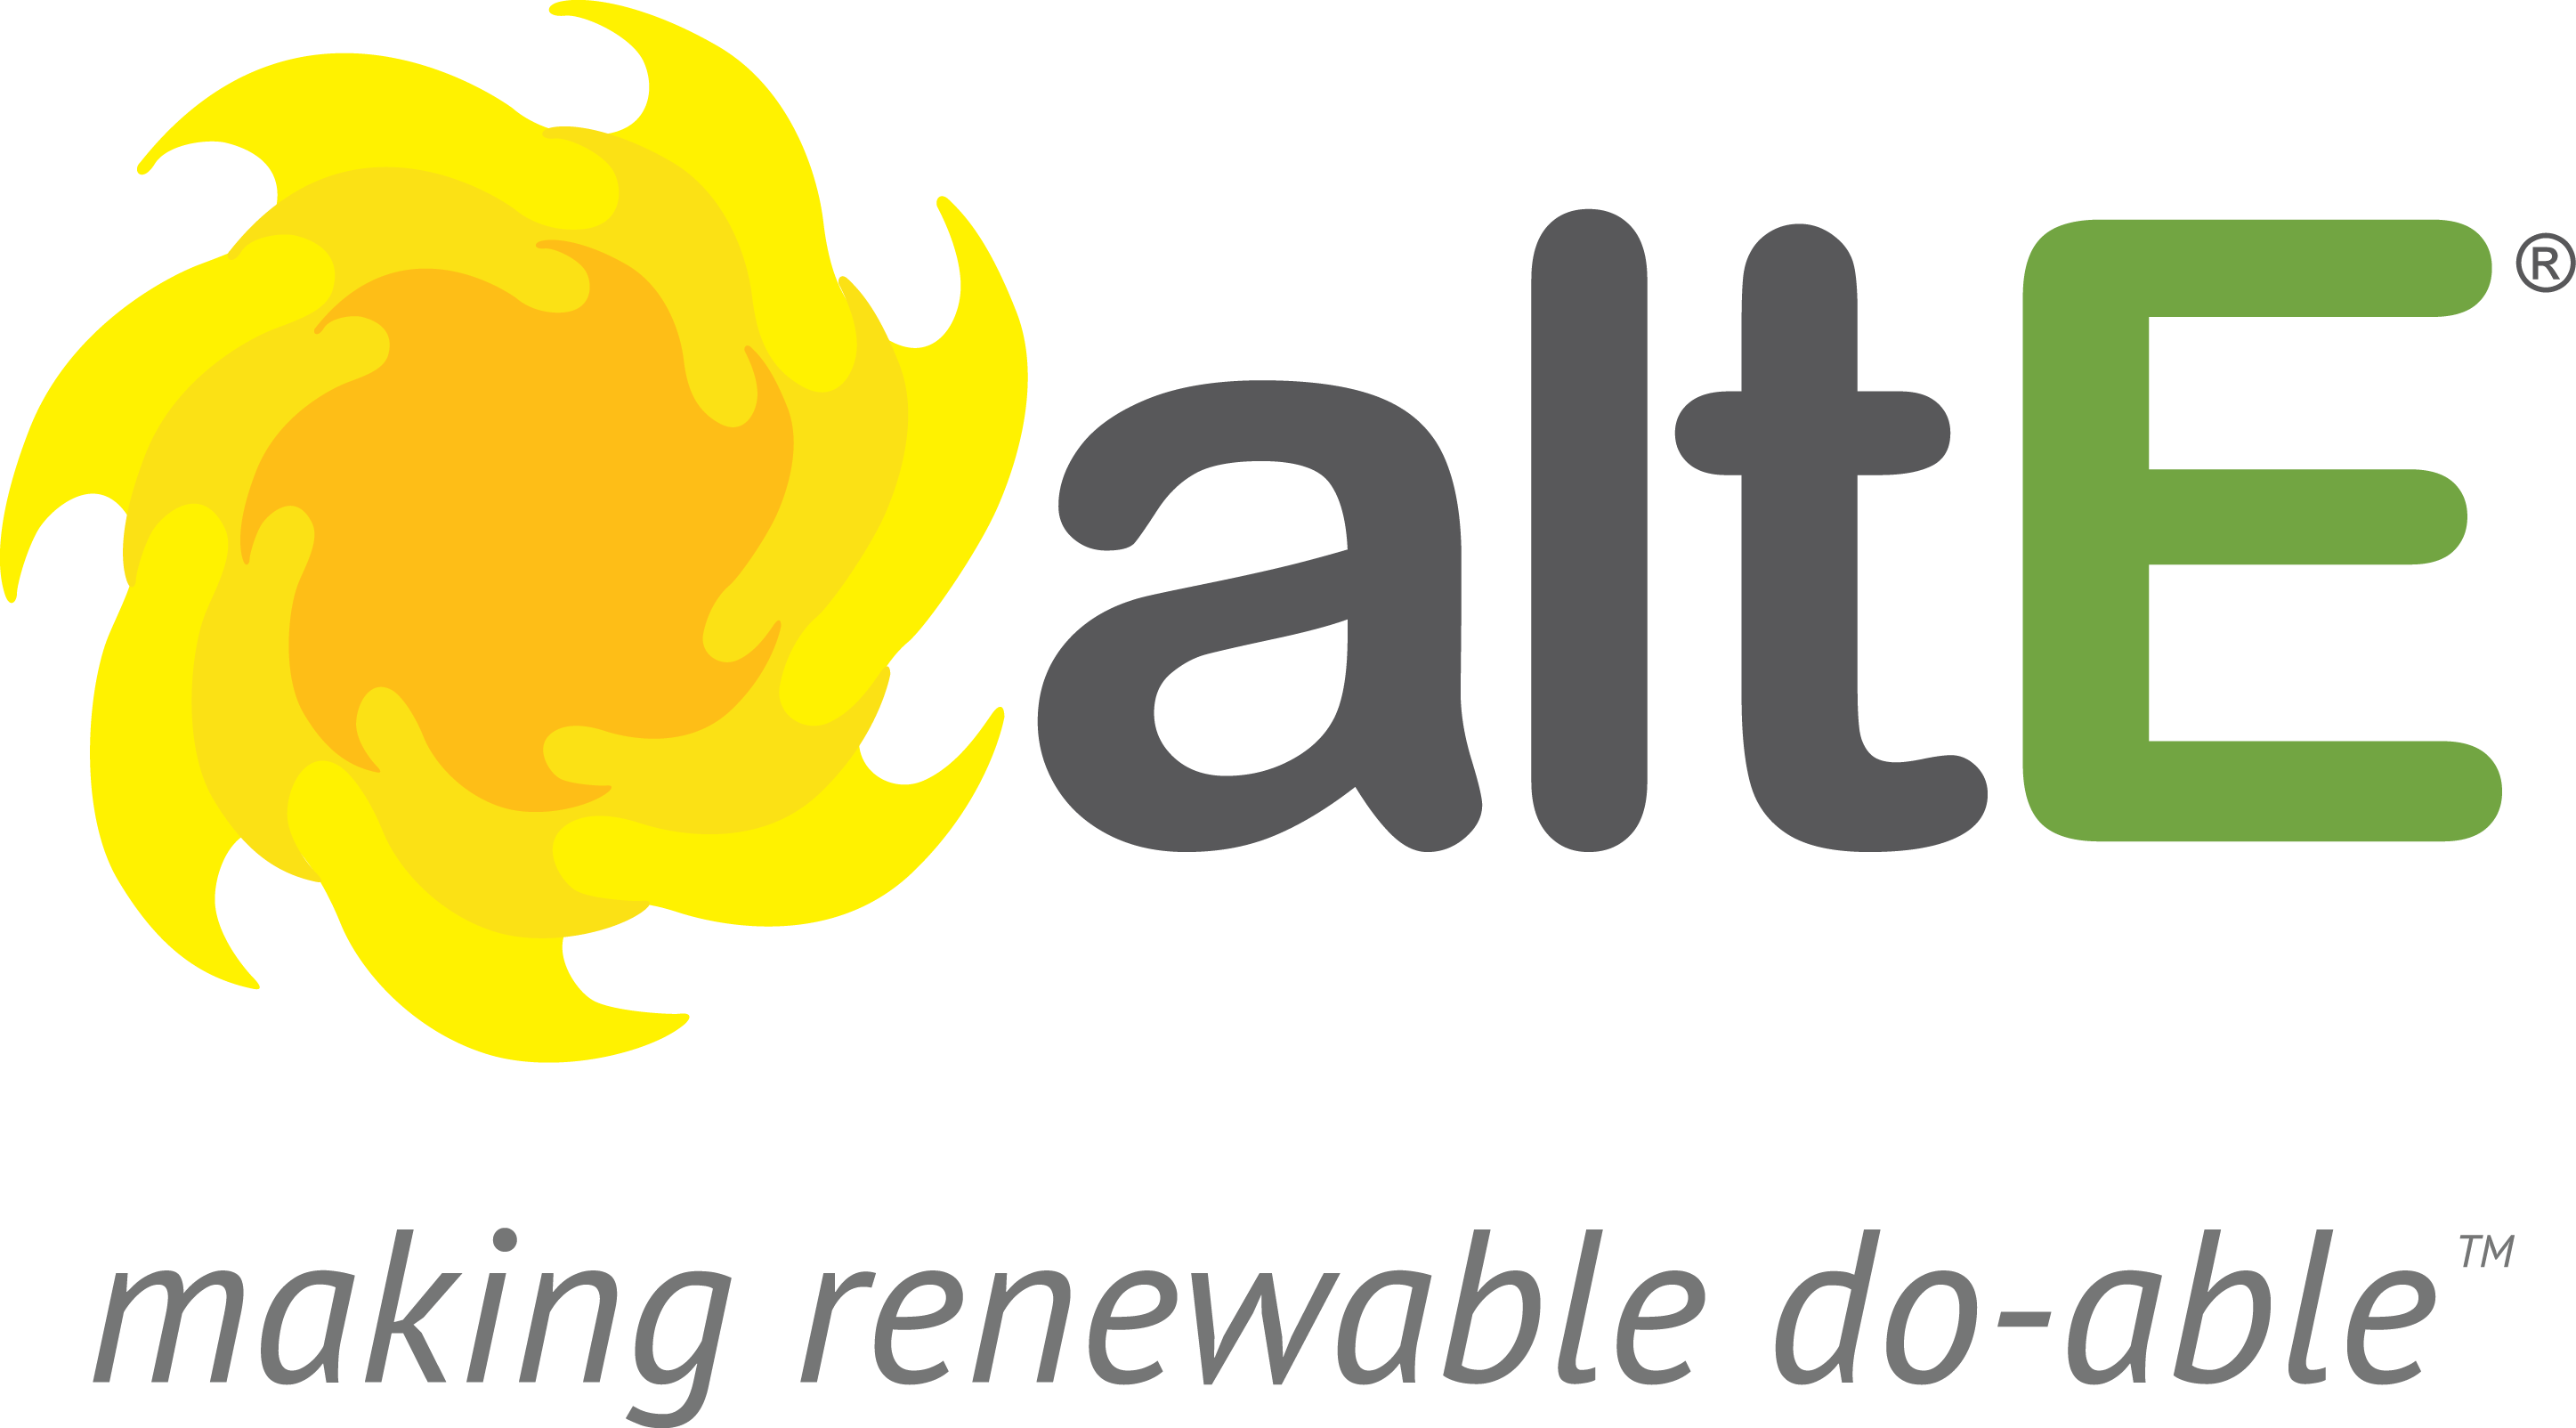 Логотип Solar Power. Solar Power Энергетик логотип. Solar Energy logo. Power since